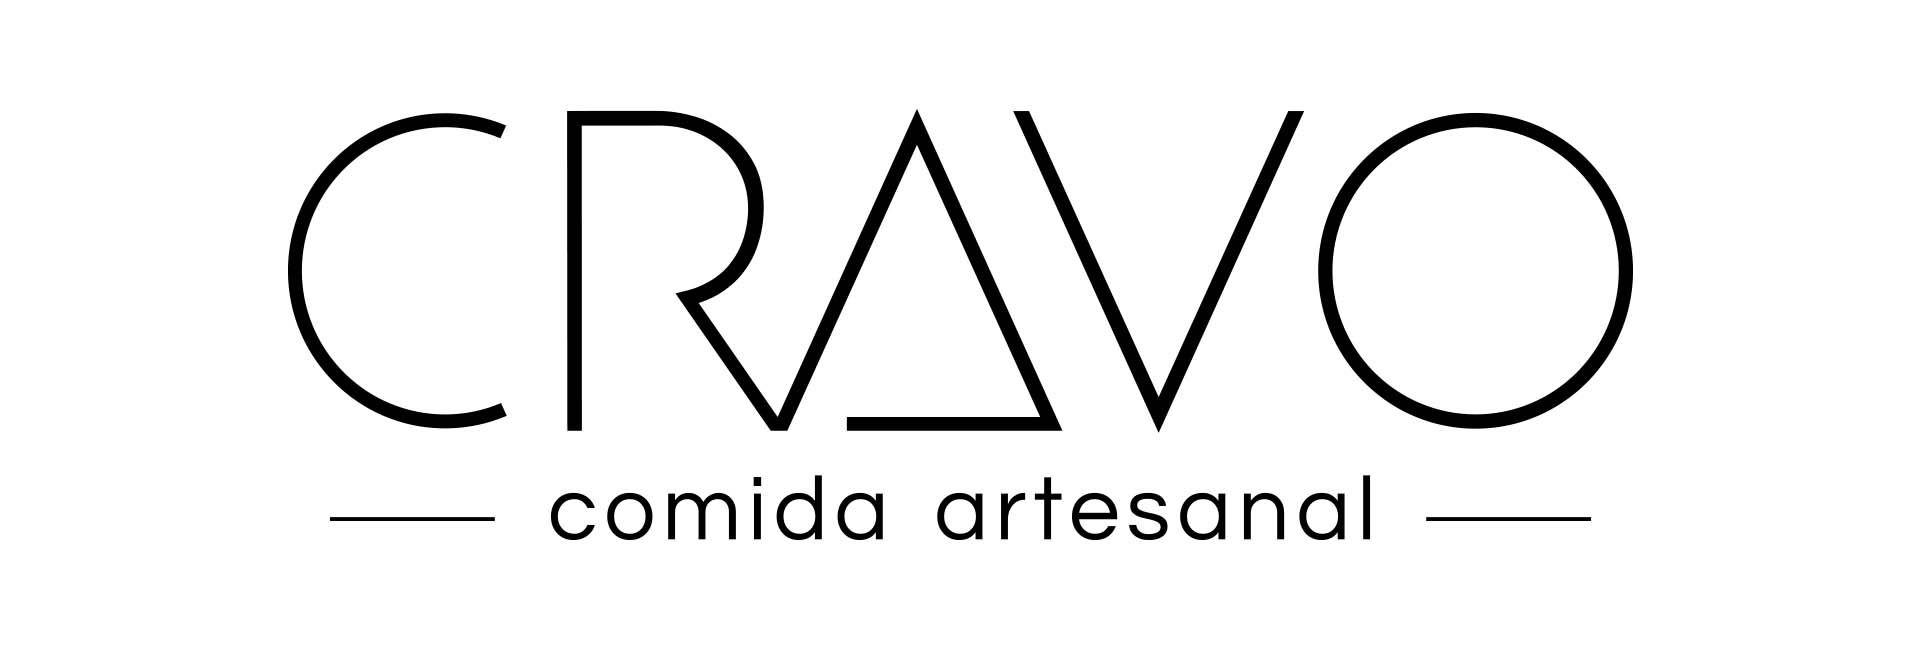 Logo-Cravo